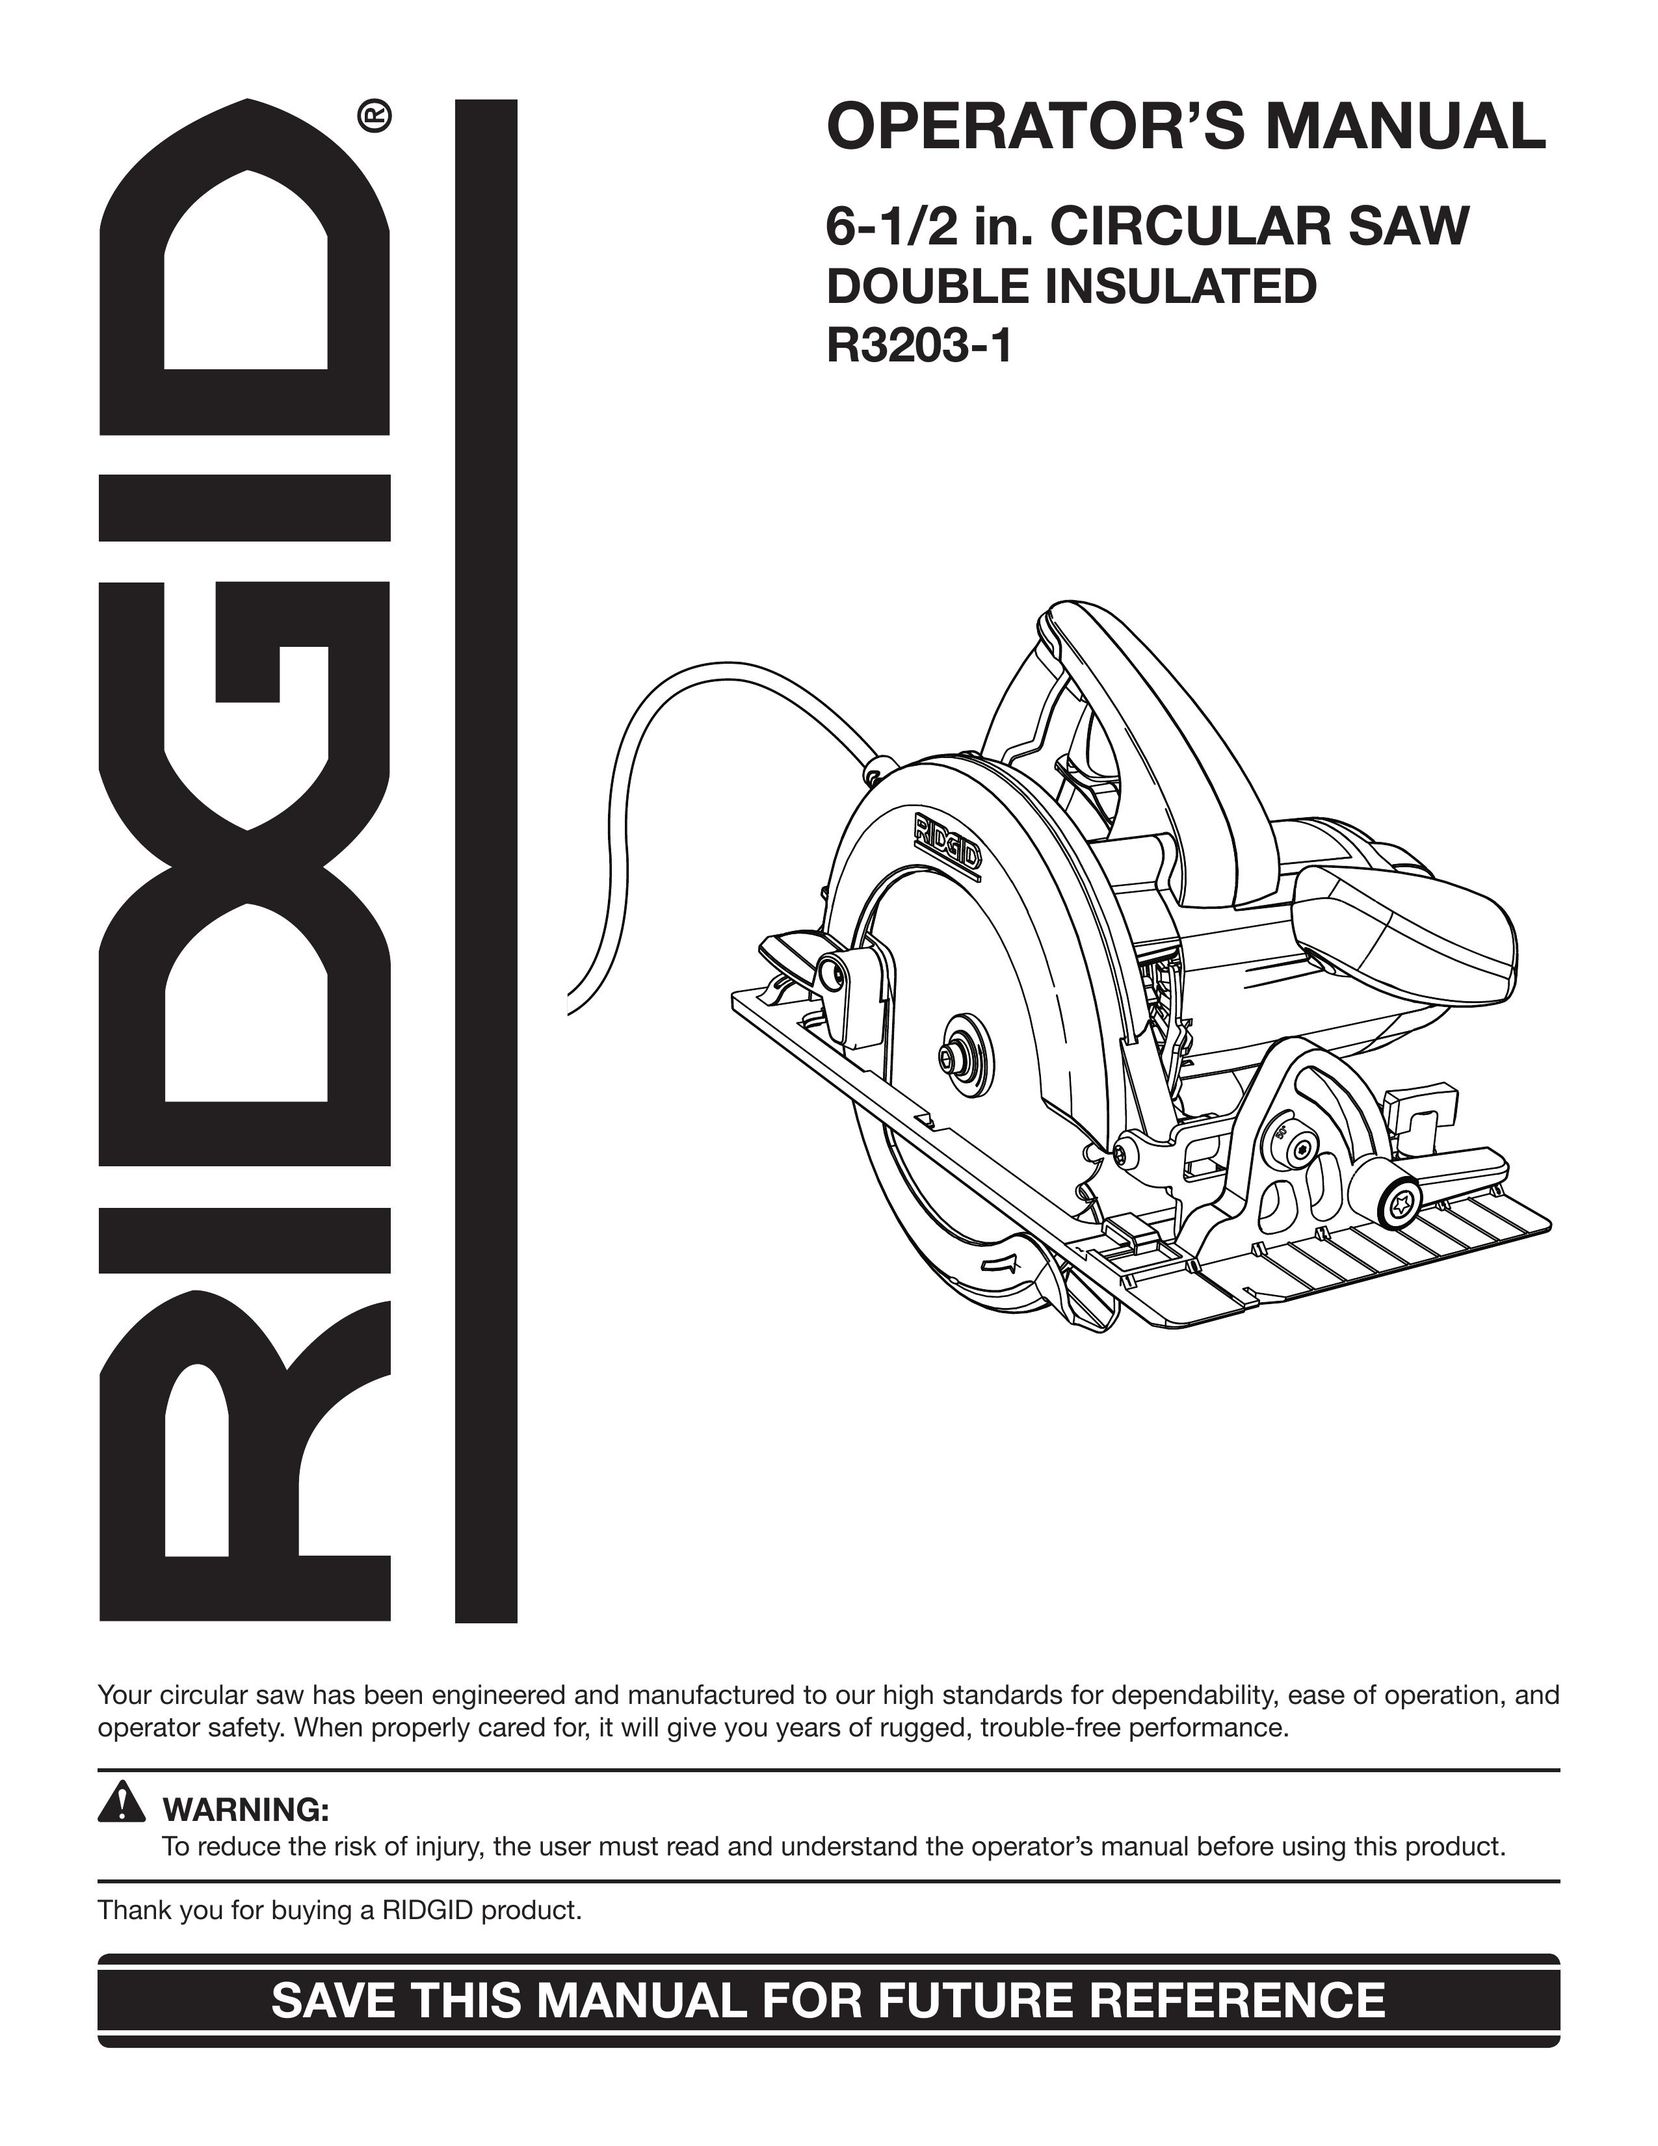 RIDGID R3203-1 Saw User Manual